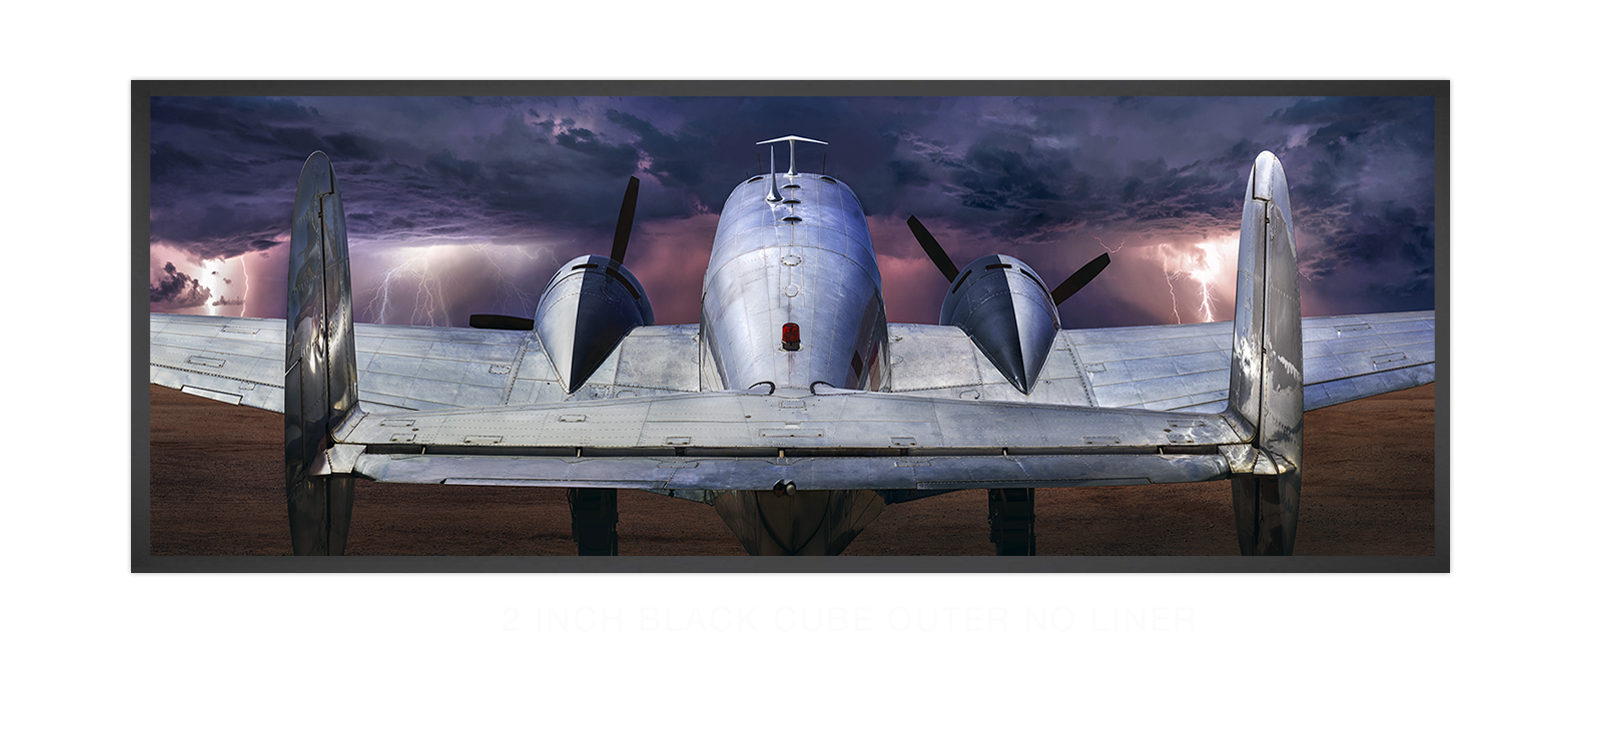 10DOYEN REIGN 2 Inch Black Cube Outer w_No Liner T copy